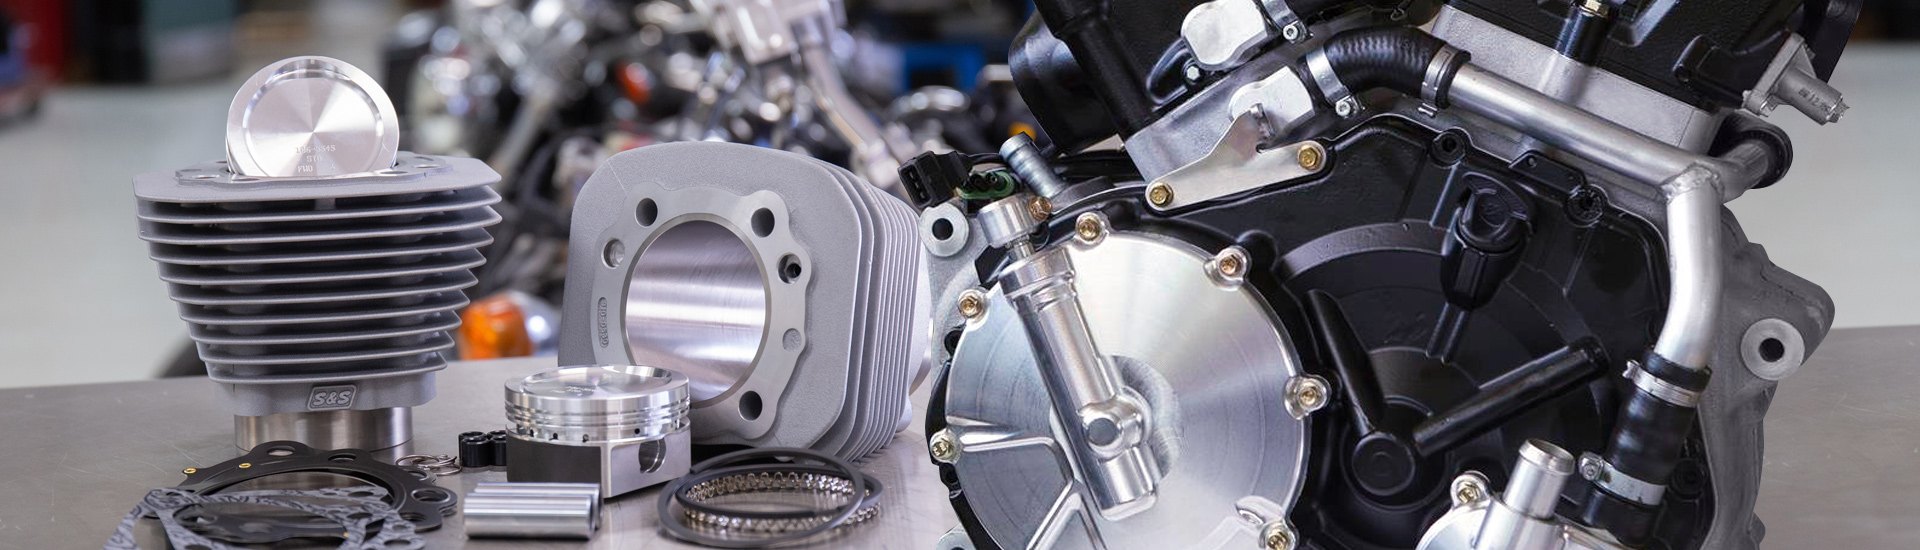 Kawasaki Ninja ZX-11 Engine Parts | Pistons & Camshafts 